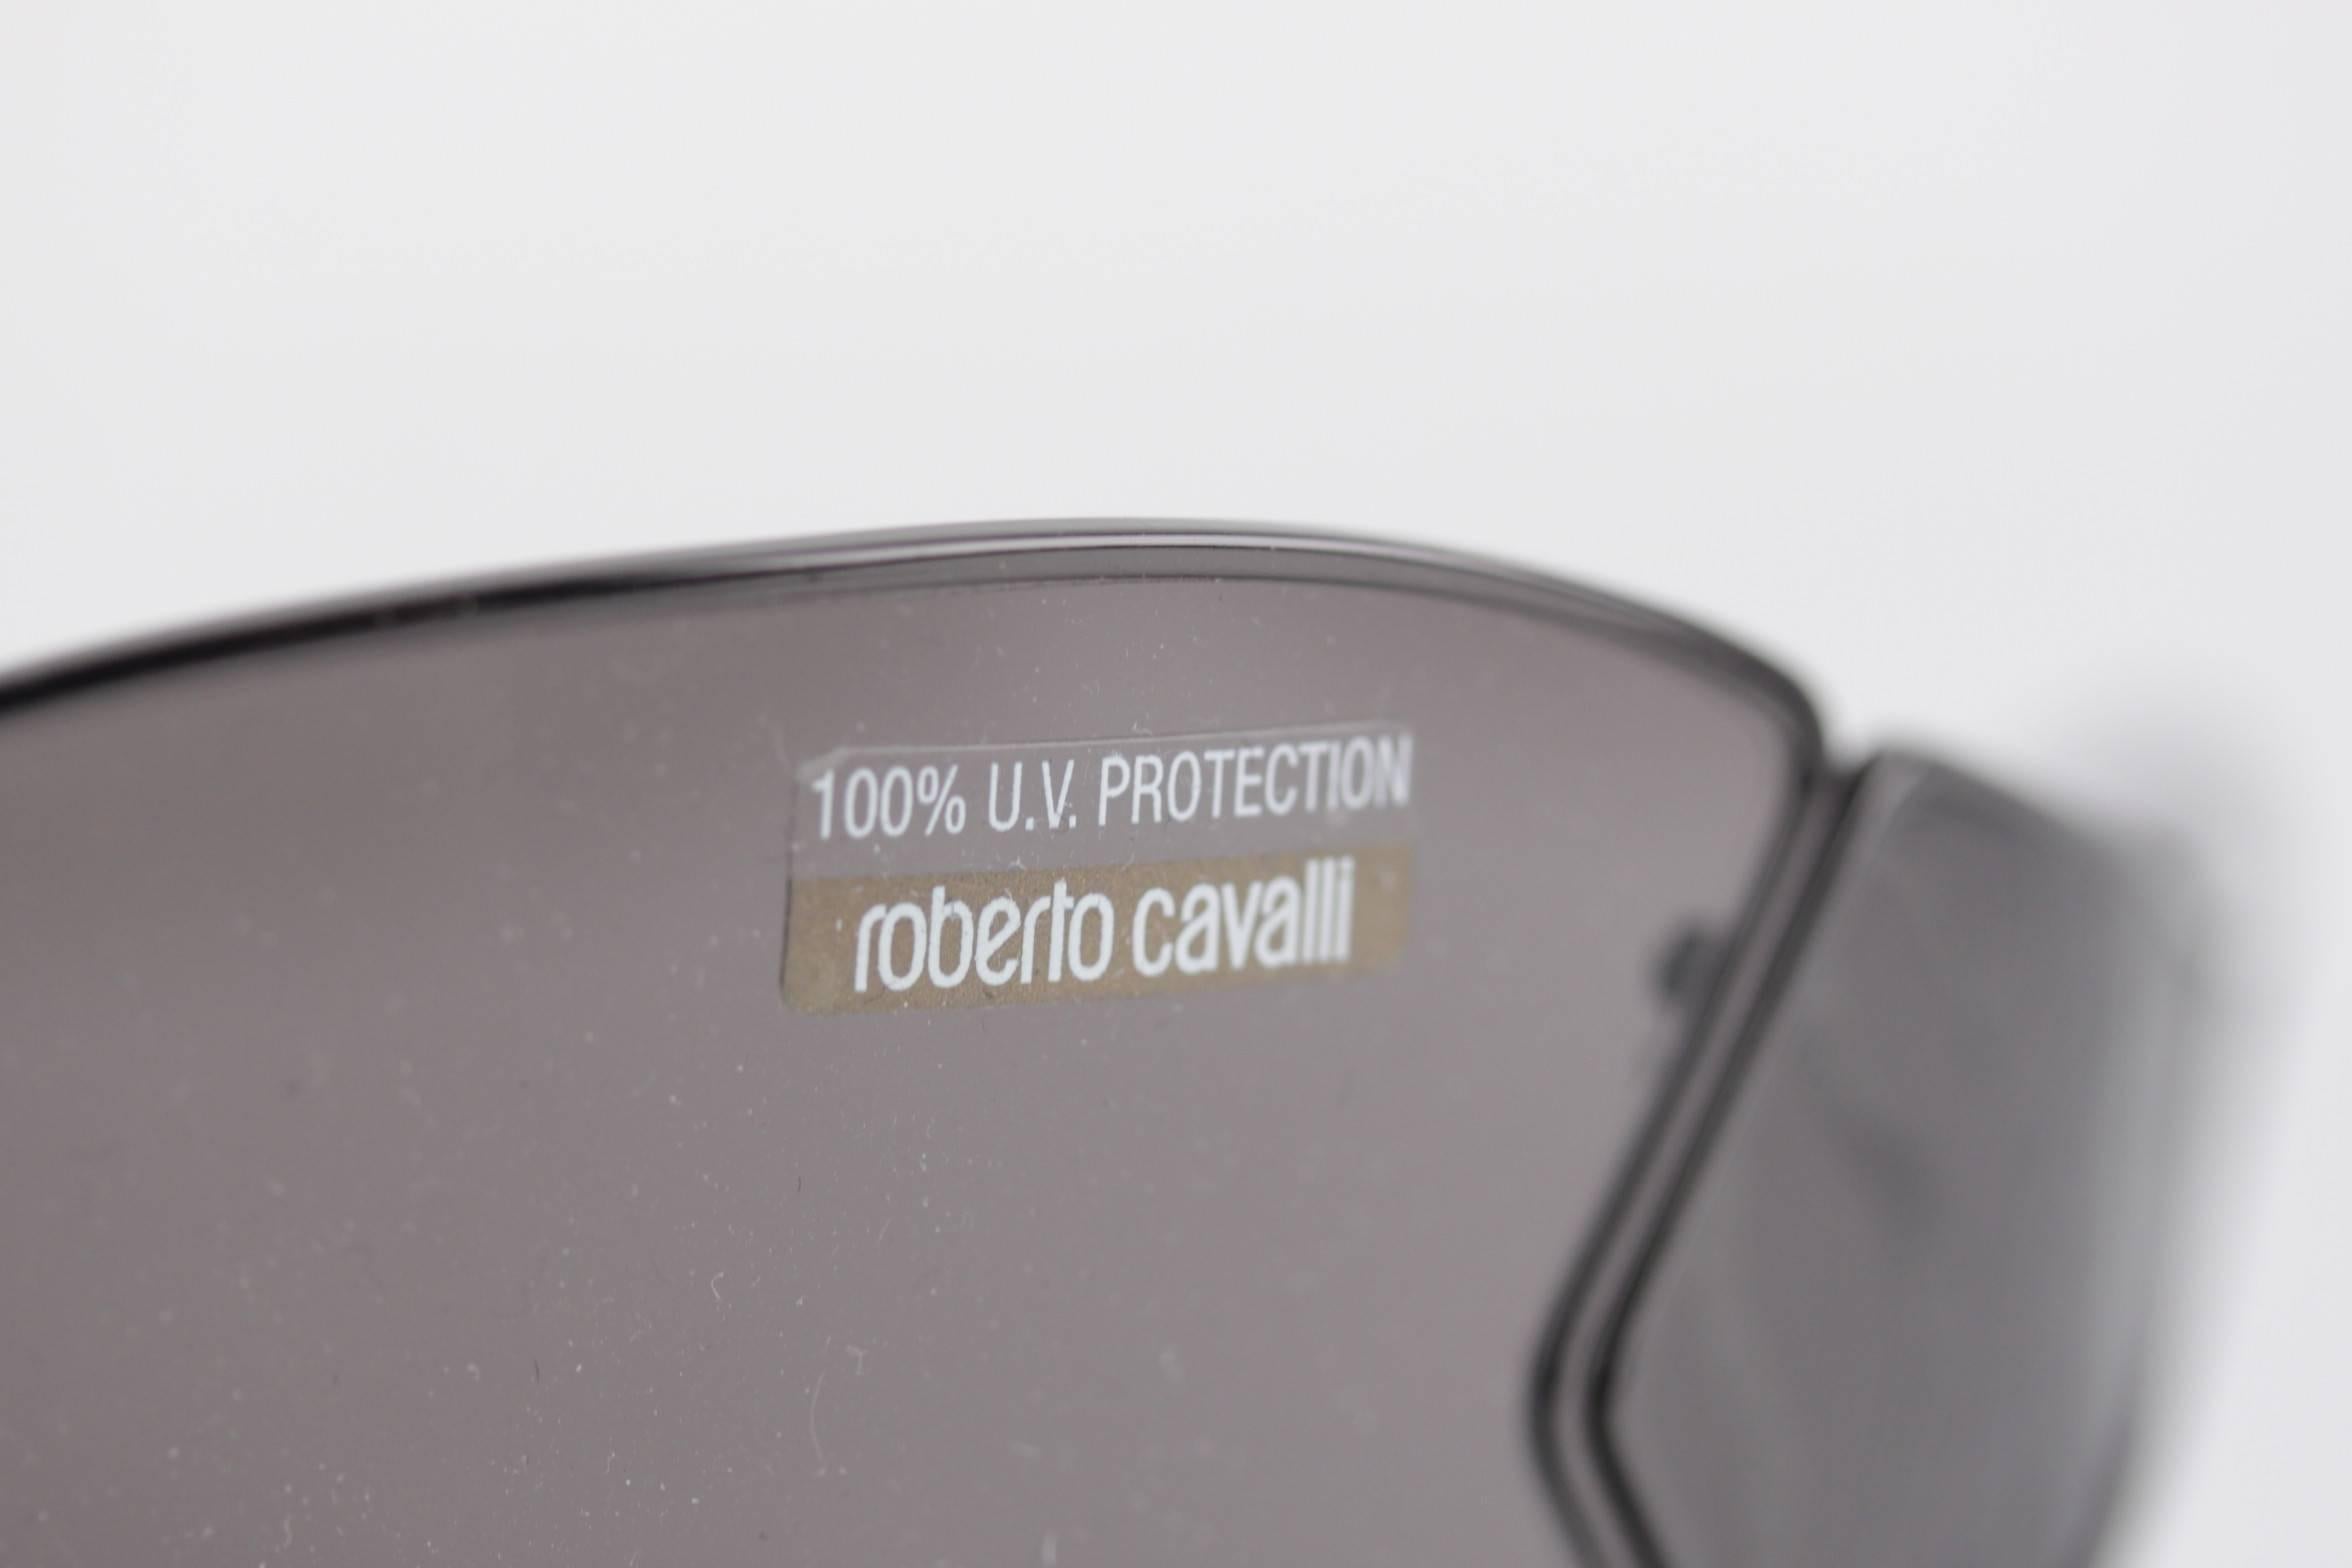 ROBERTO CAVALLI Sunglasses Mod. ARACNE 218 S 223 70/1 130 Gunmetal WRAP Style 2